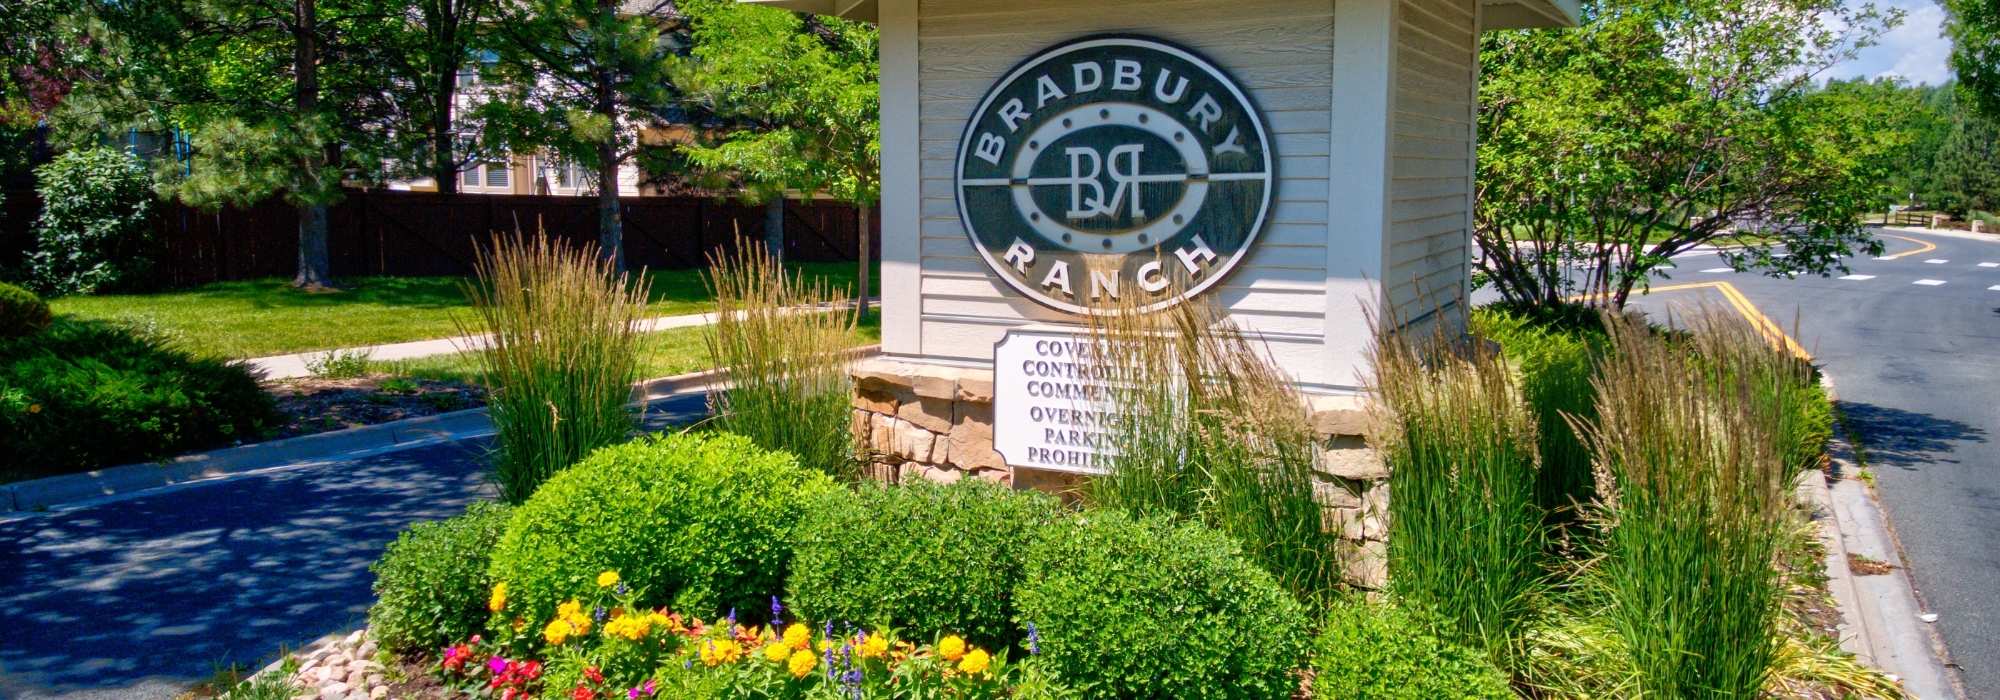 Photo of Bradbury Ranch Monument at Neighborhood Entrance